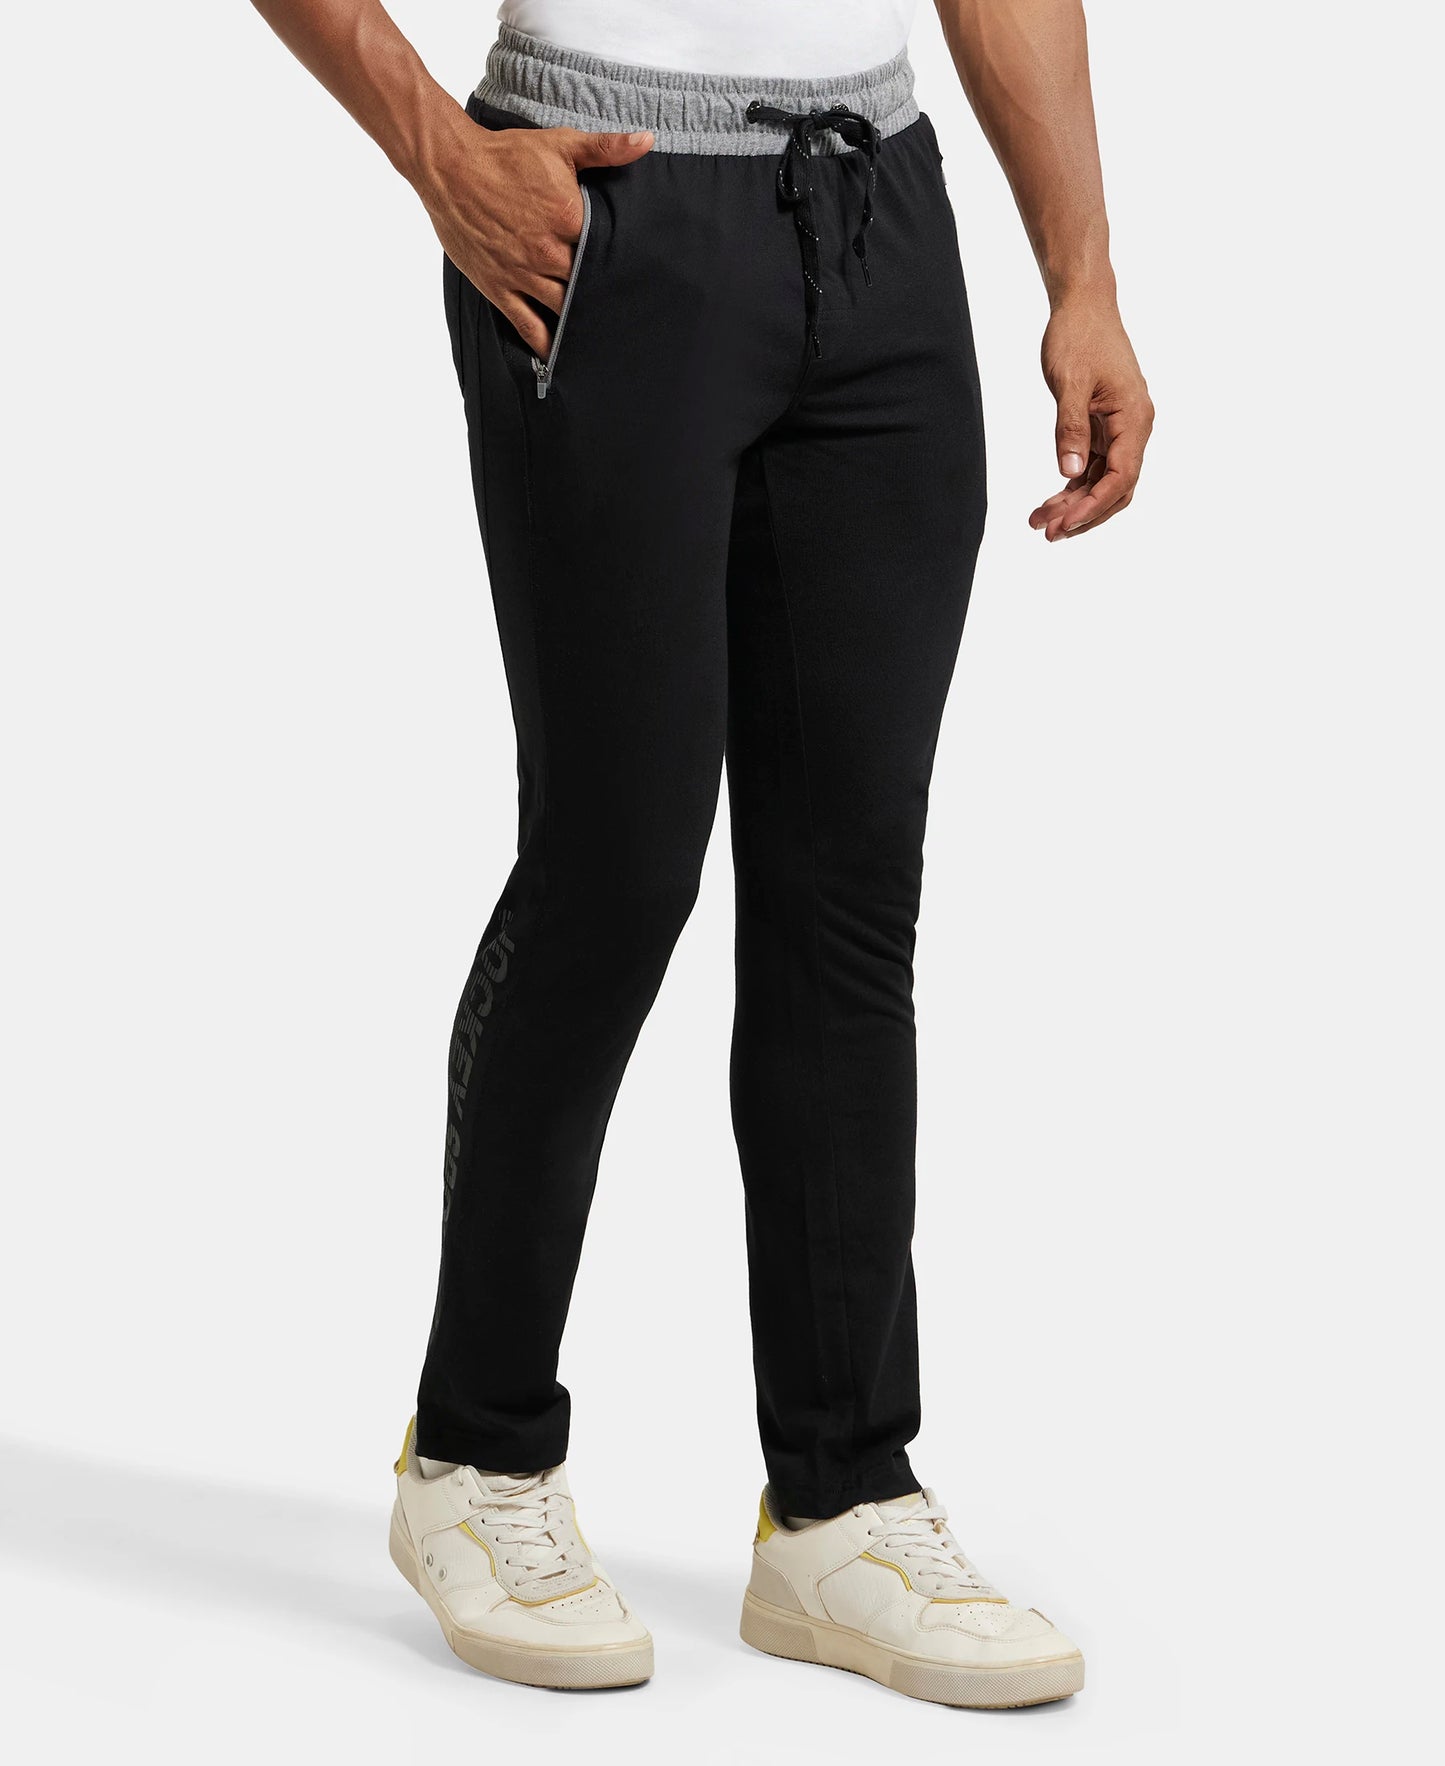 Super Combed Cotton Rich Slim Fit Trackpant with Side Zipper Pockets - Black & Grey Melange-2